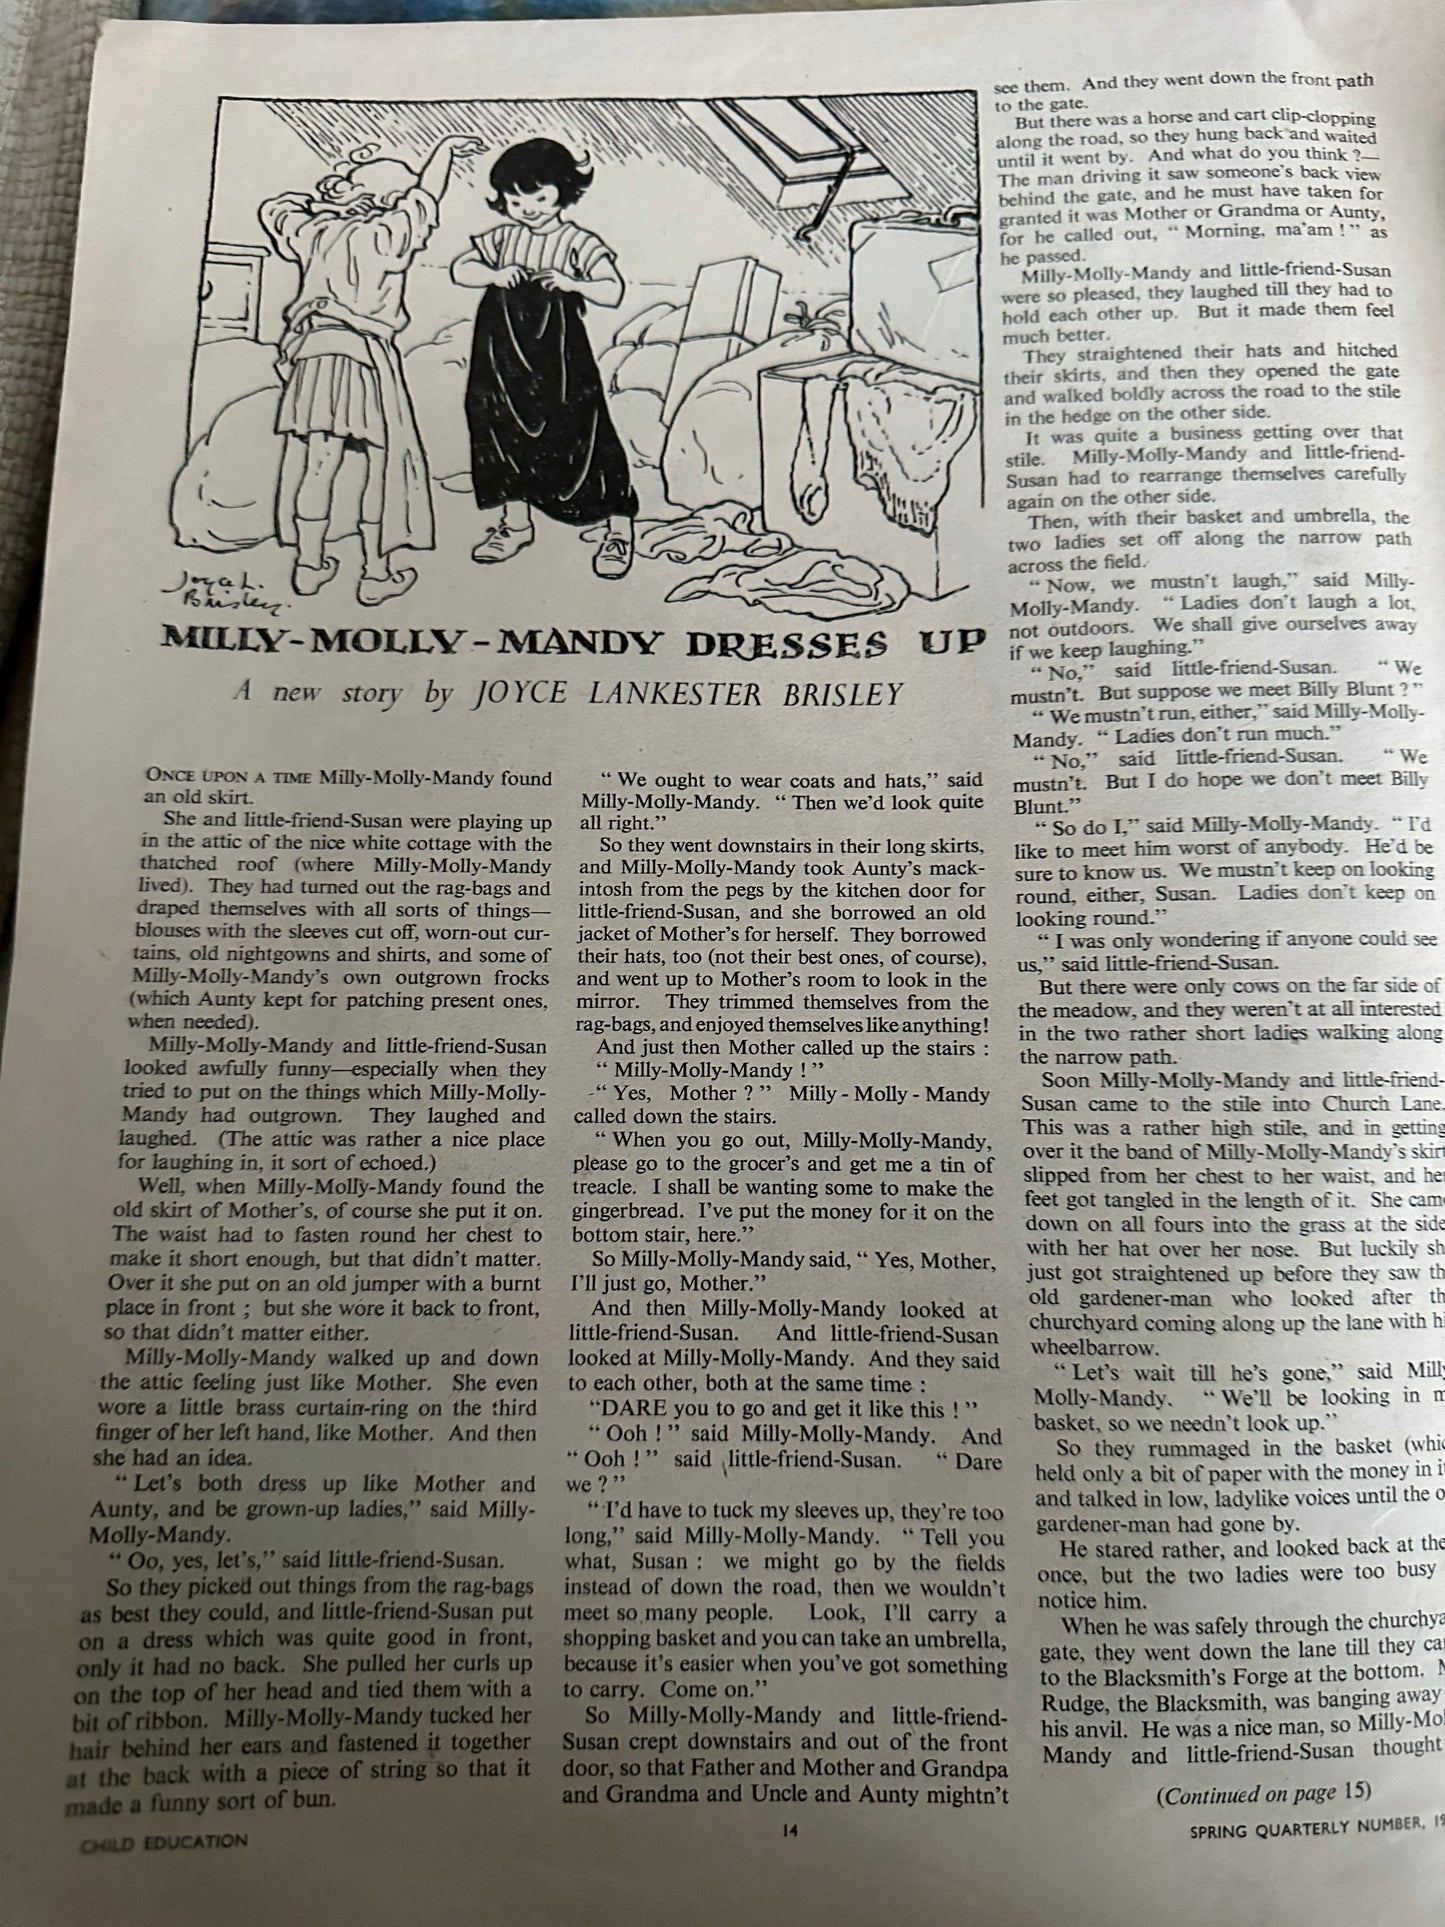 1954 Child Education(Spring Quarter Issue) Evans Brothers Ltd